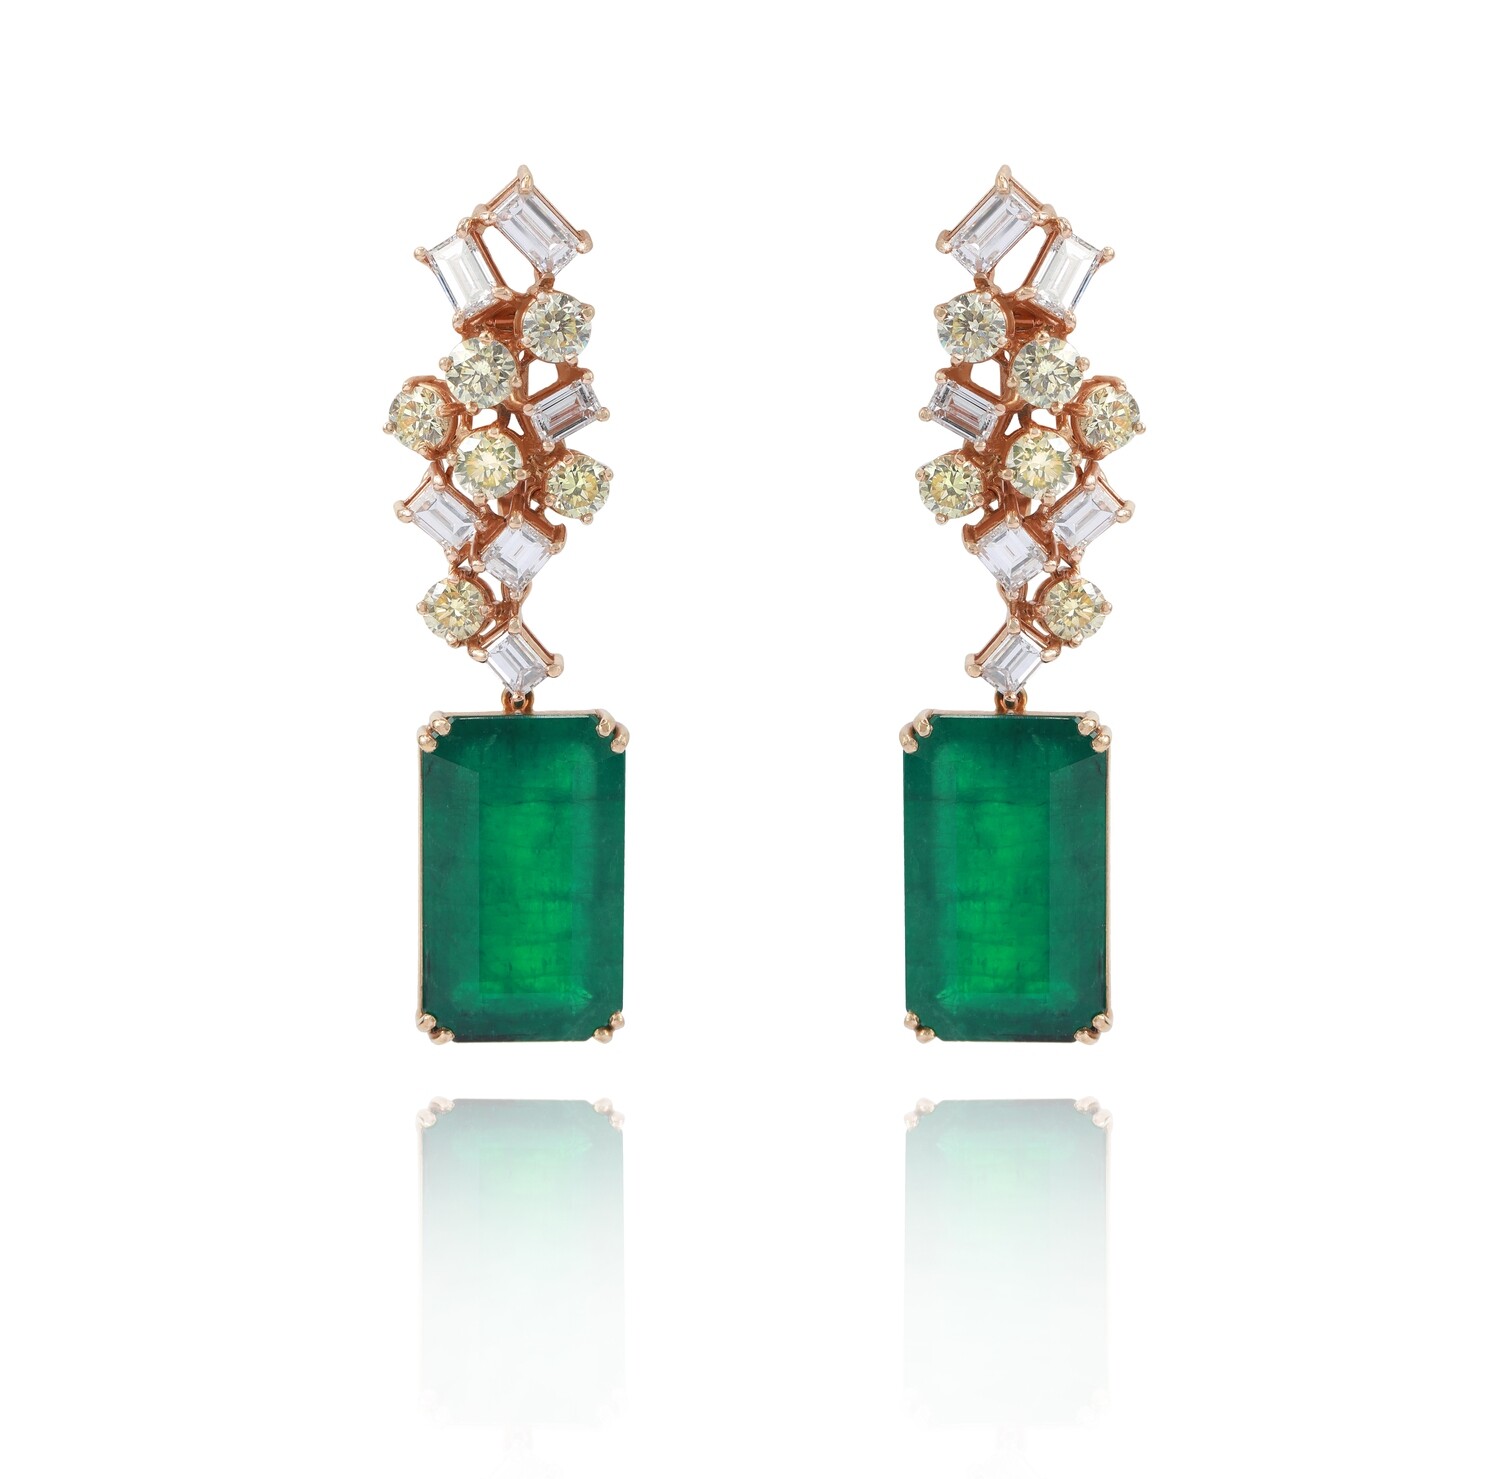 Eternal Diamond Earrings with Emerald